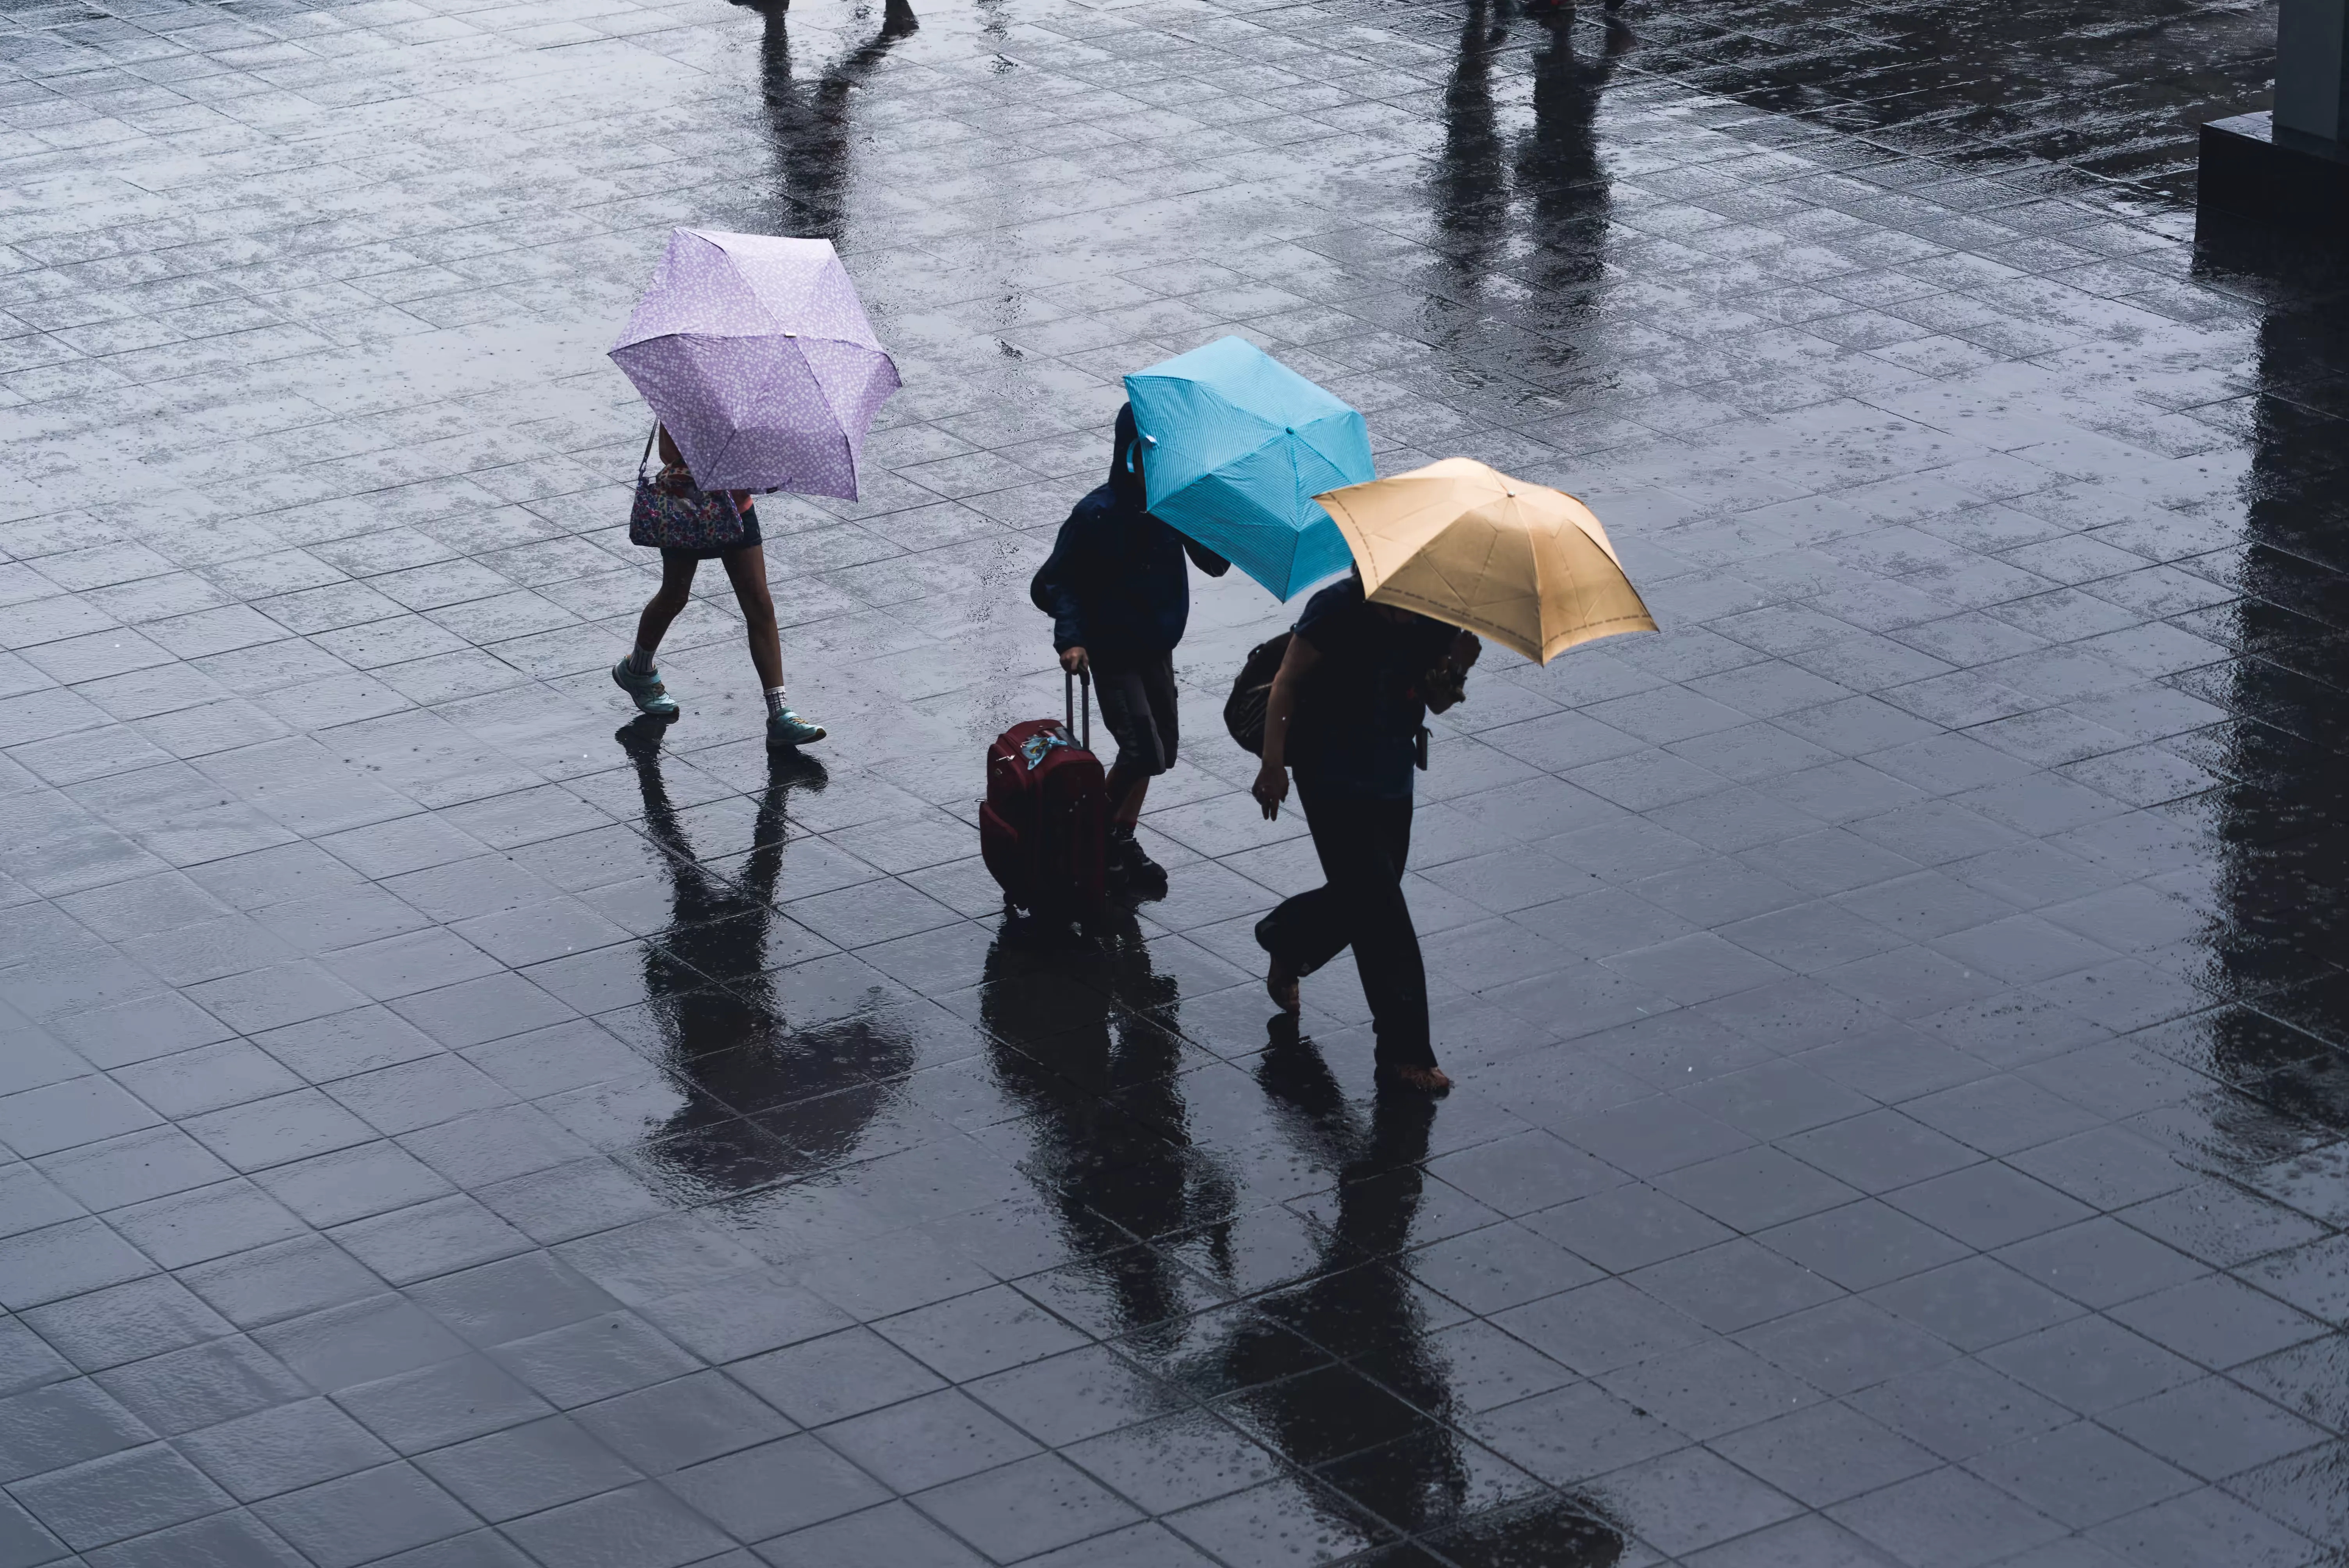 https://unsplash.com/photos/selective-color-photography-of-three-person-holding-umbrellas-under-the-rain-IeV07y5UK3k